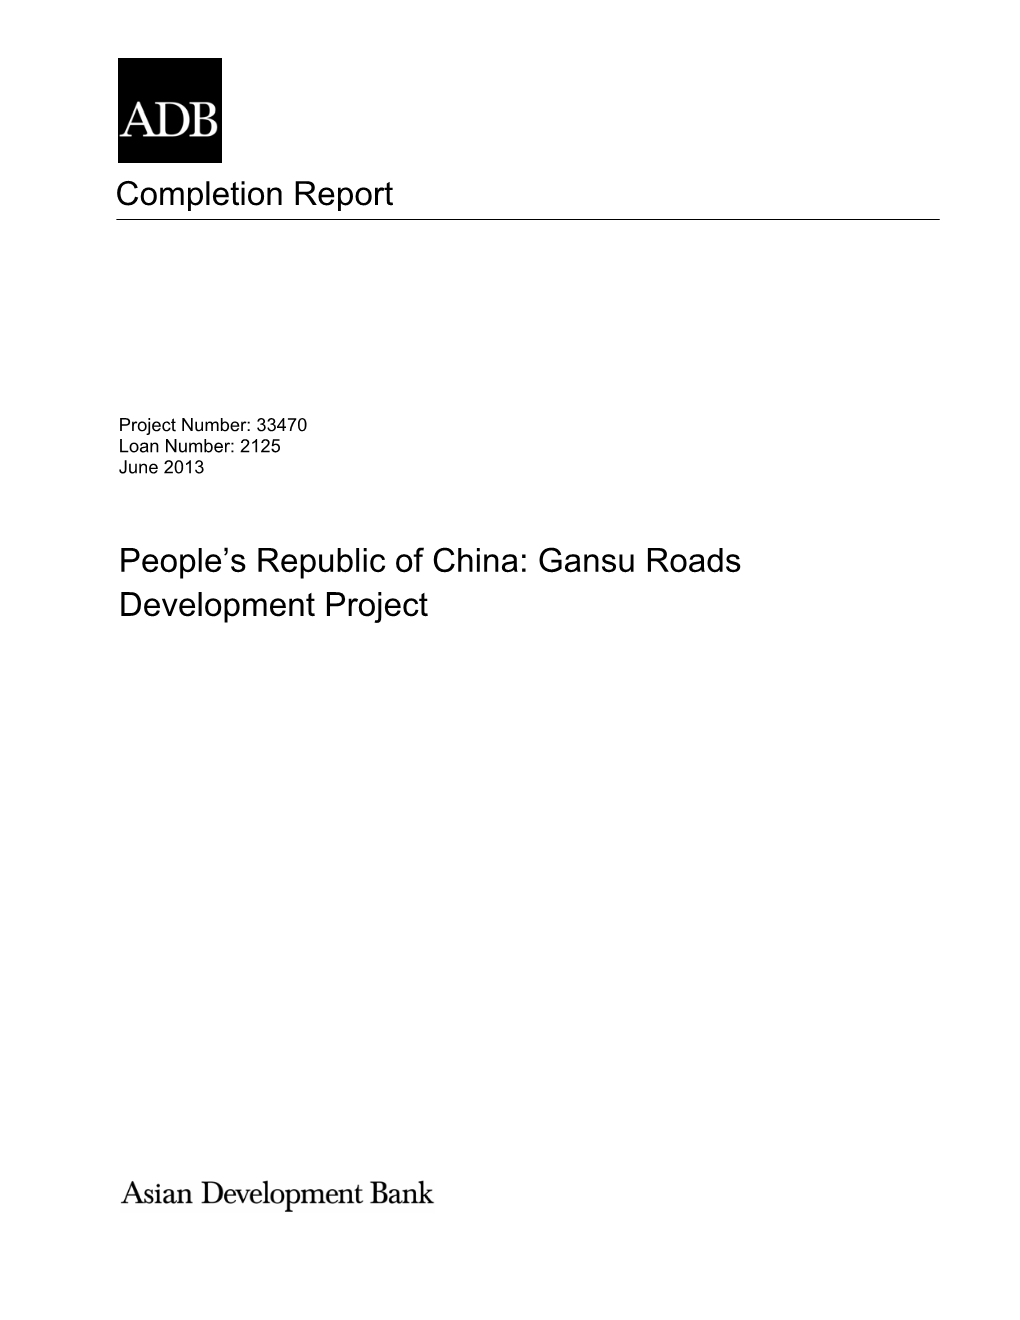 Gansu Roads Development Project